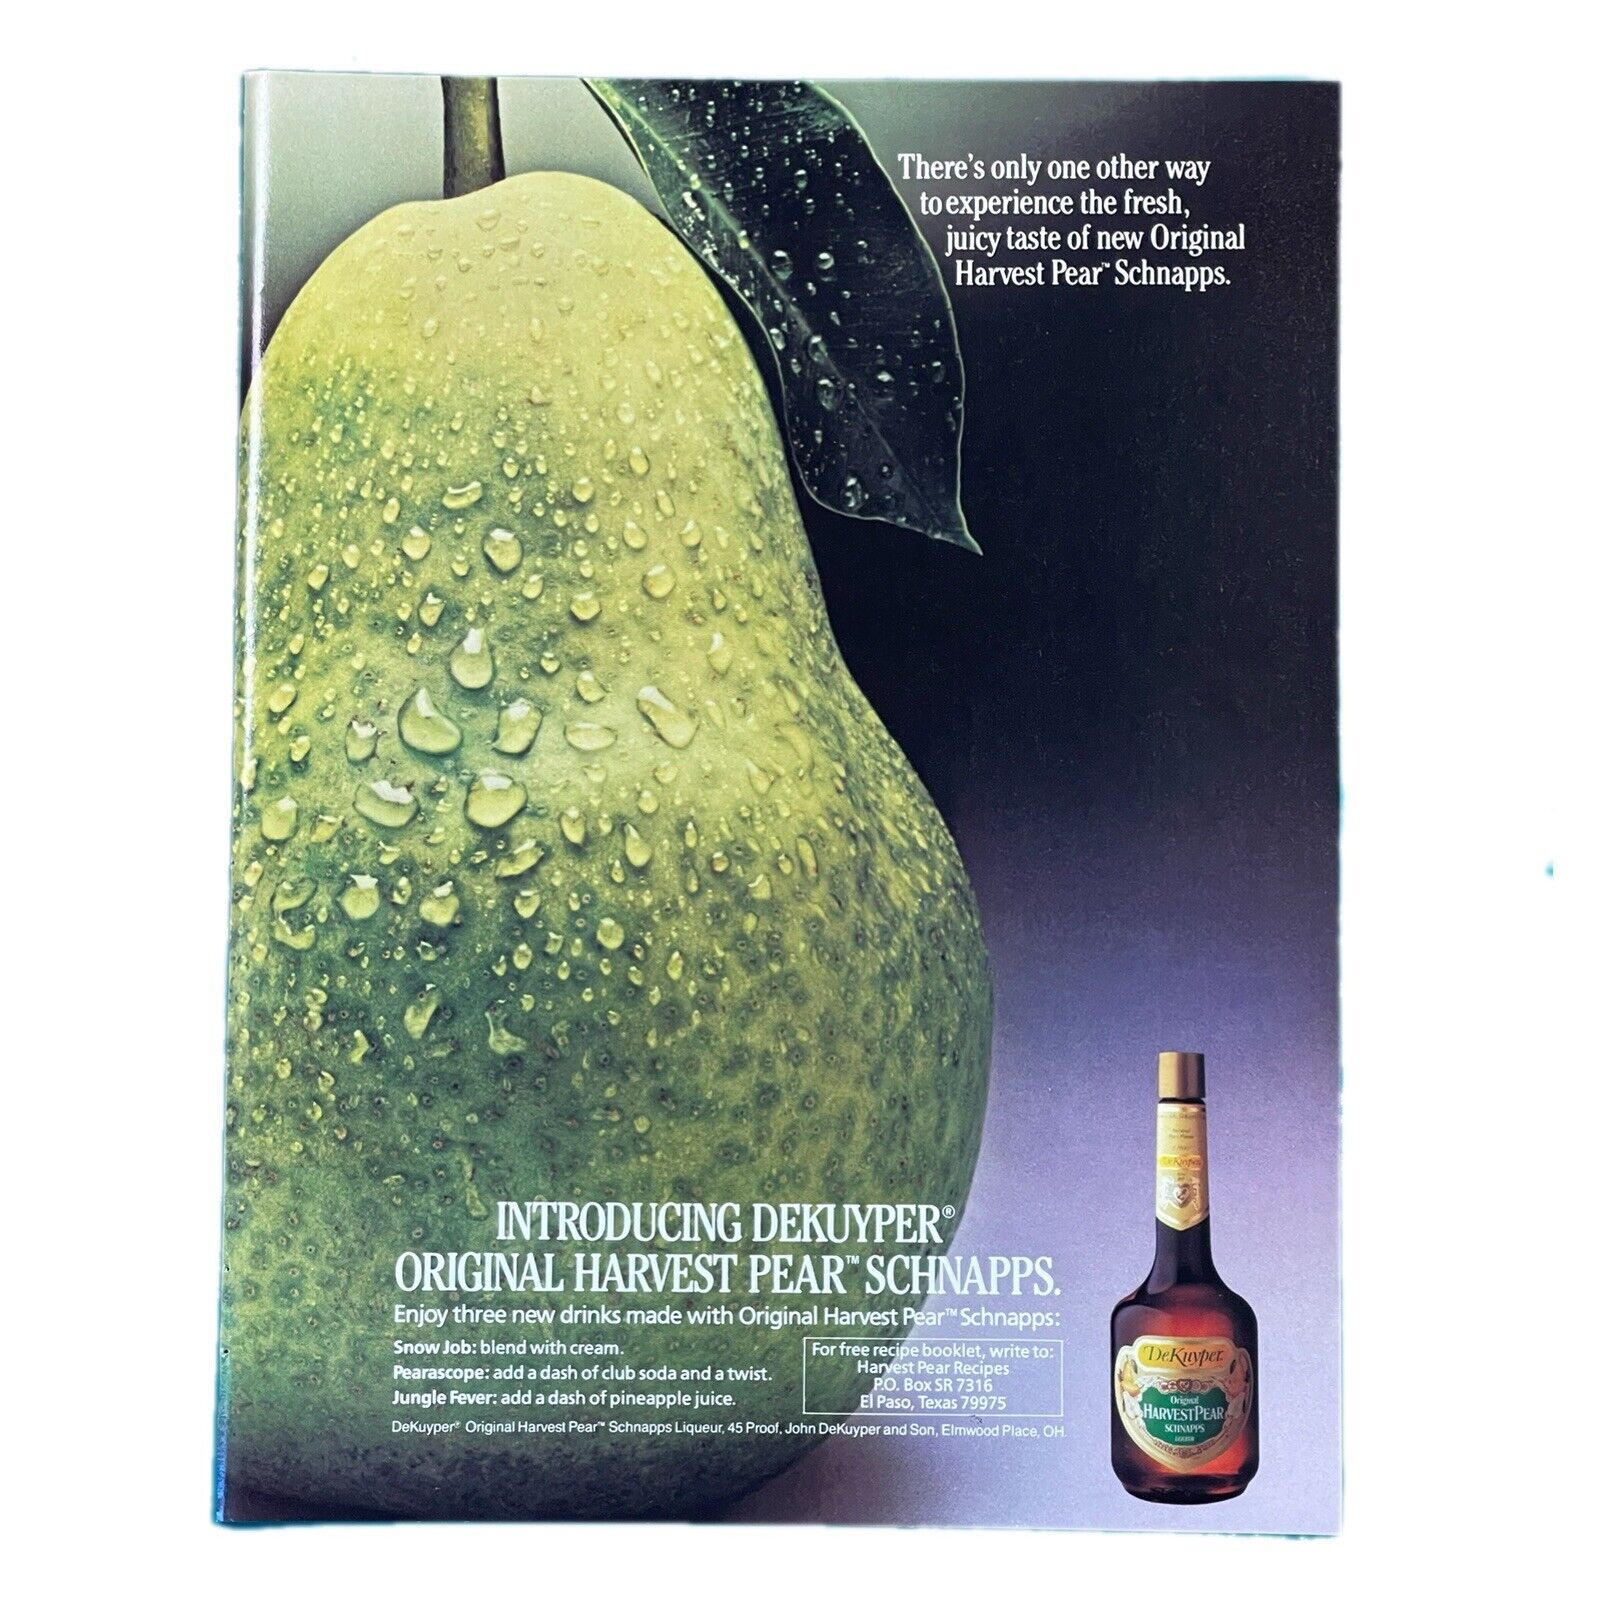 Dekuyper Harvest Pear Schnapps Print Advertisement Vintage 1986 80s 8.25x11”